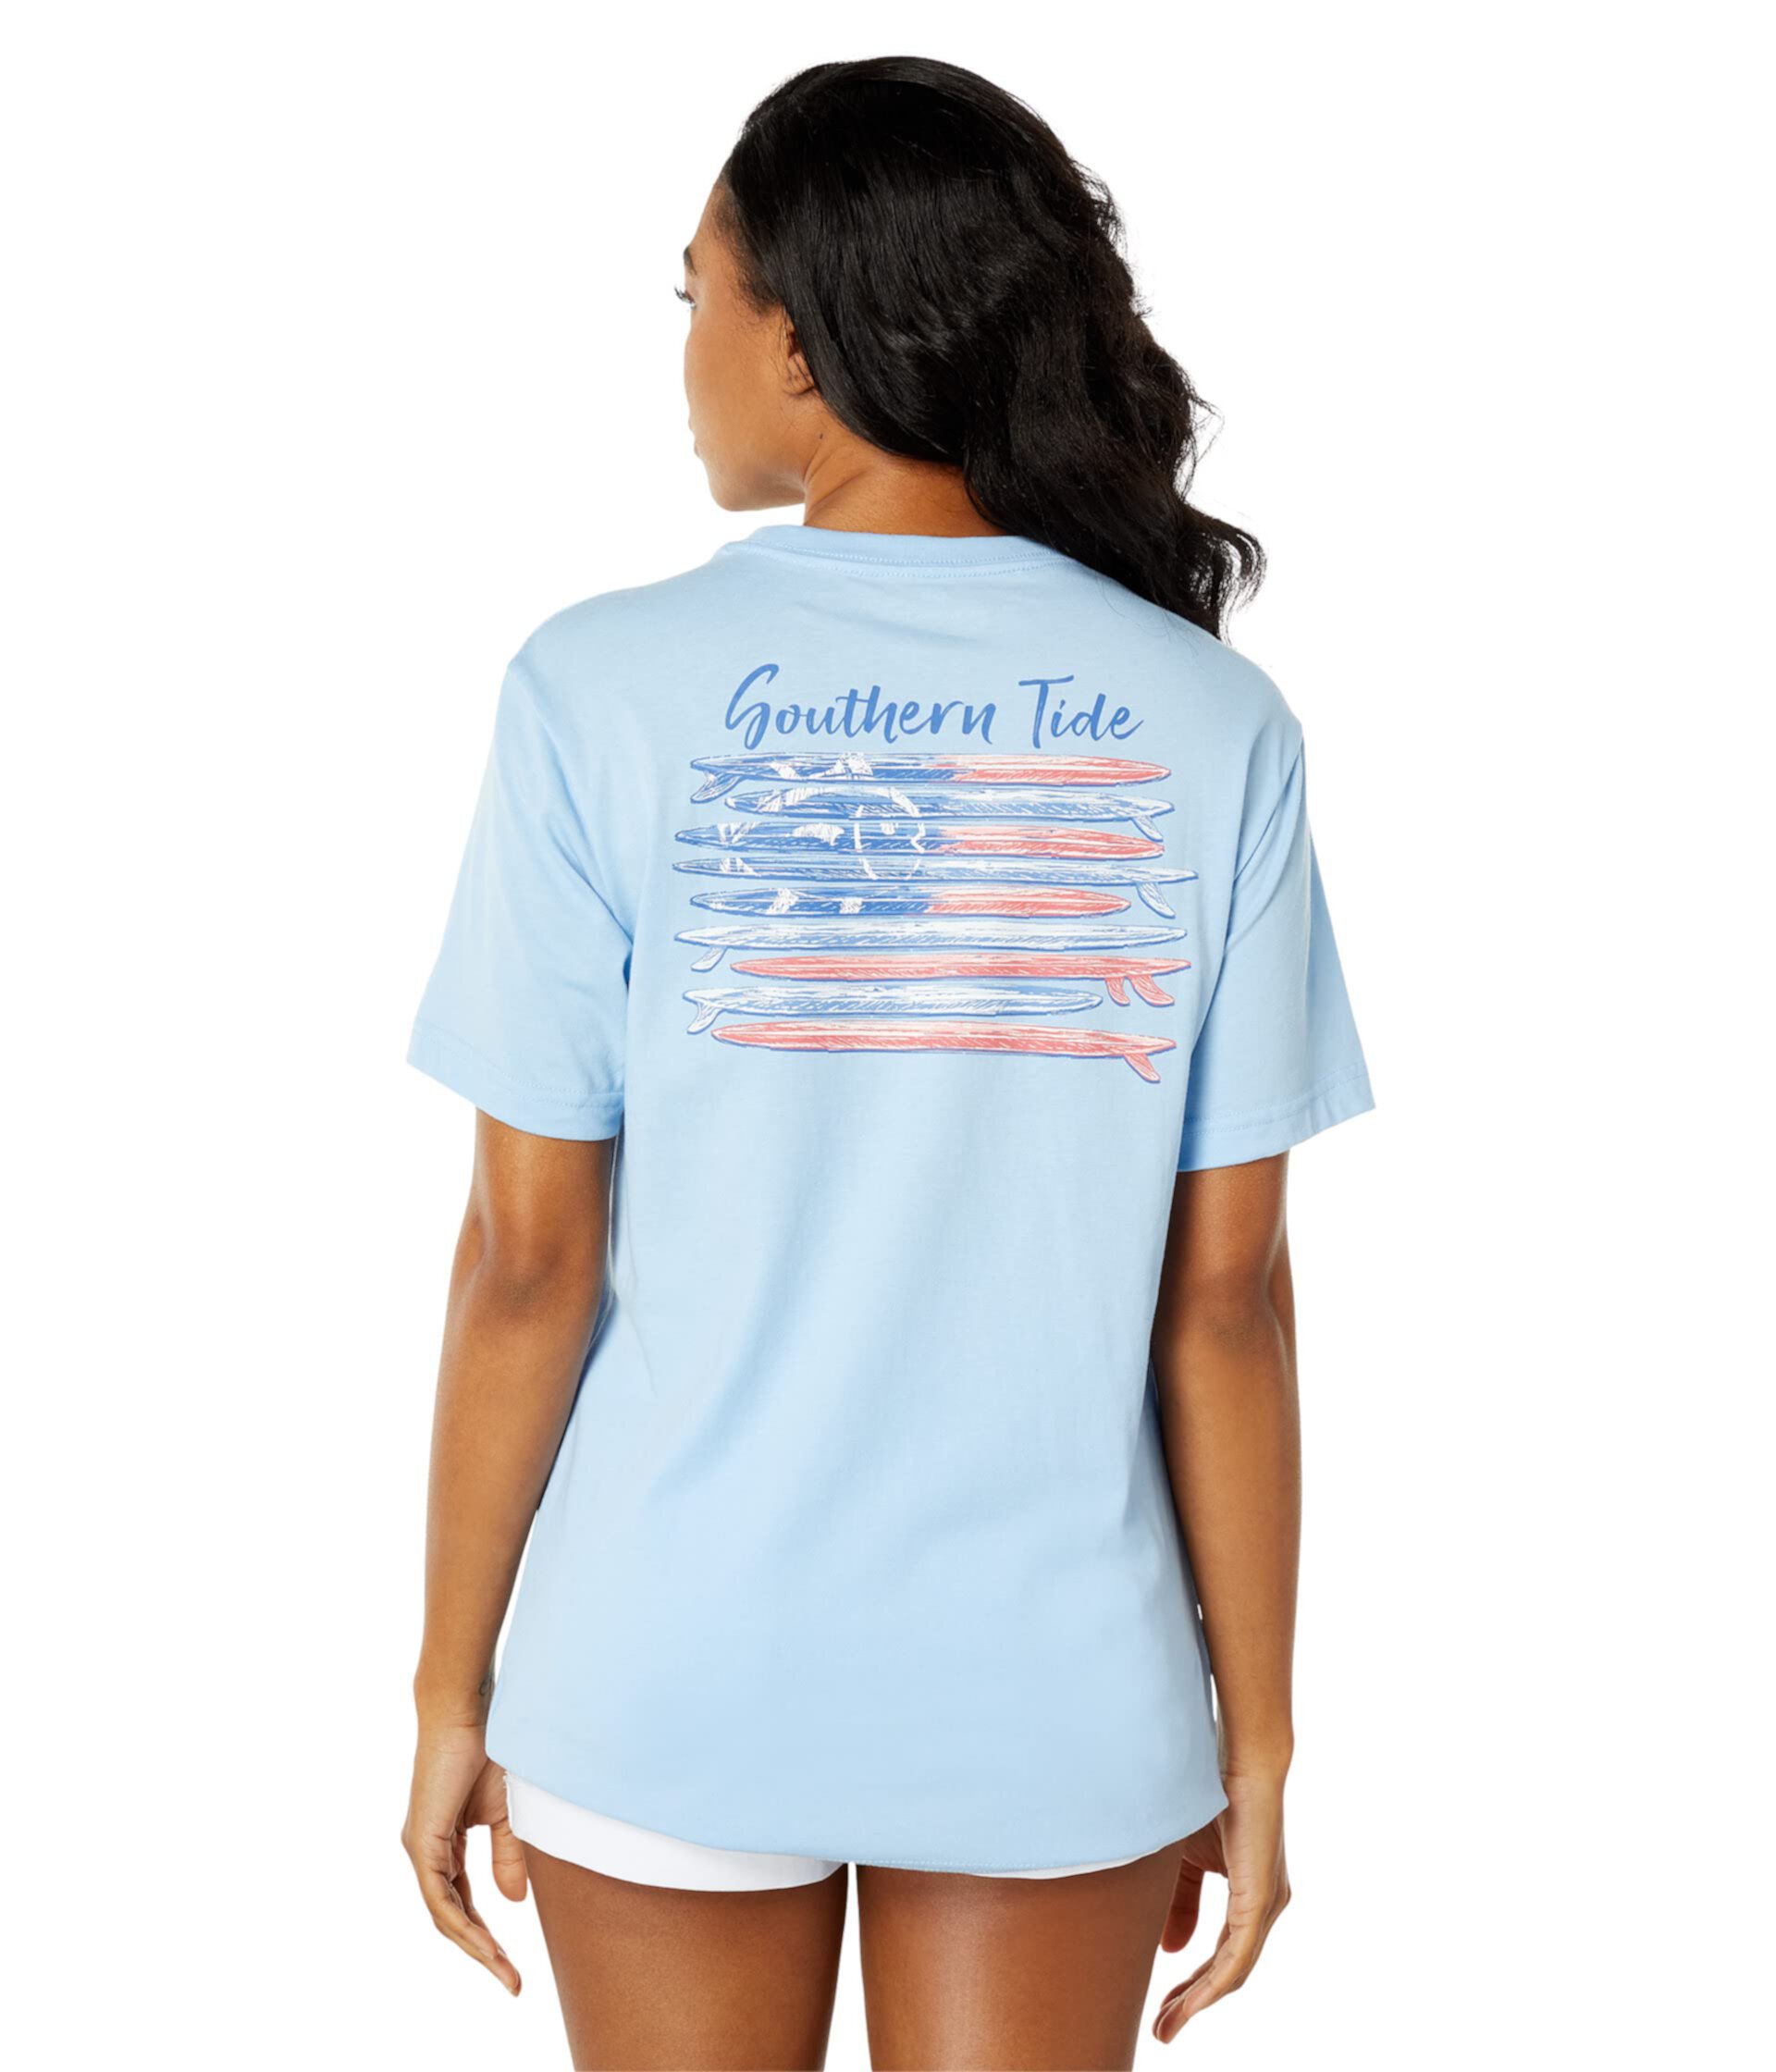 Surfboard Flag T-Shirt Southern Tide